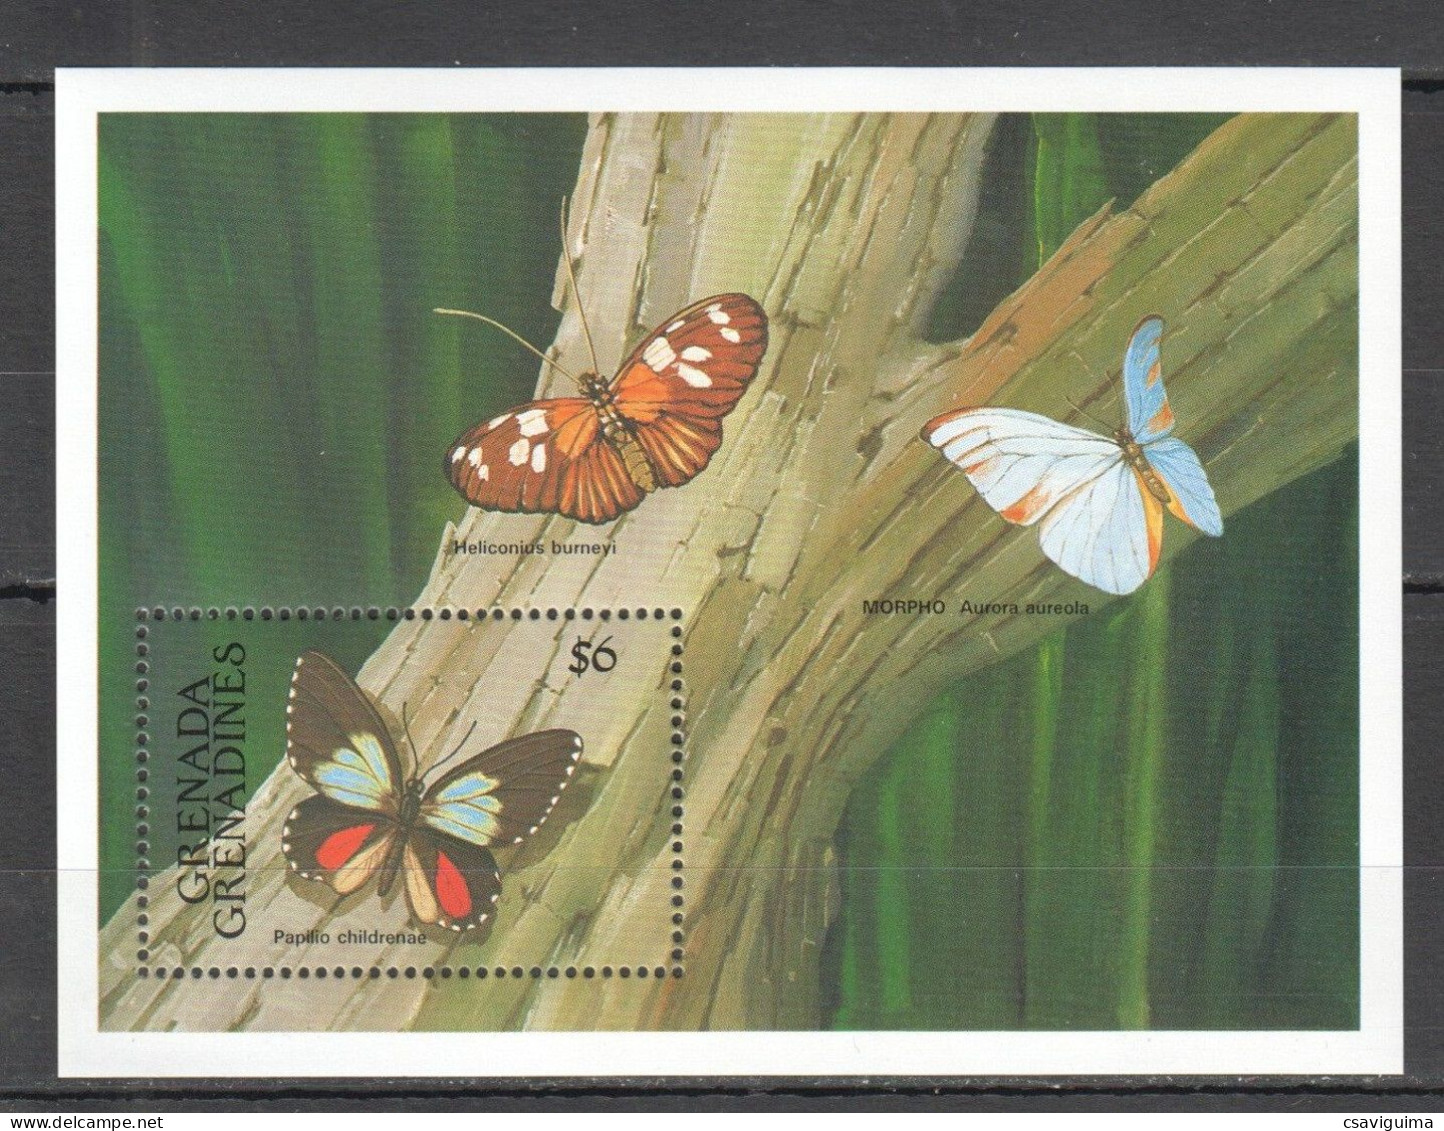 Grenada Grenadines - 1992 - Insects: Butterflies - Yv Bf 240 - Vlinders